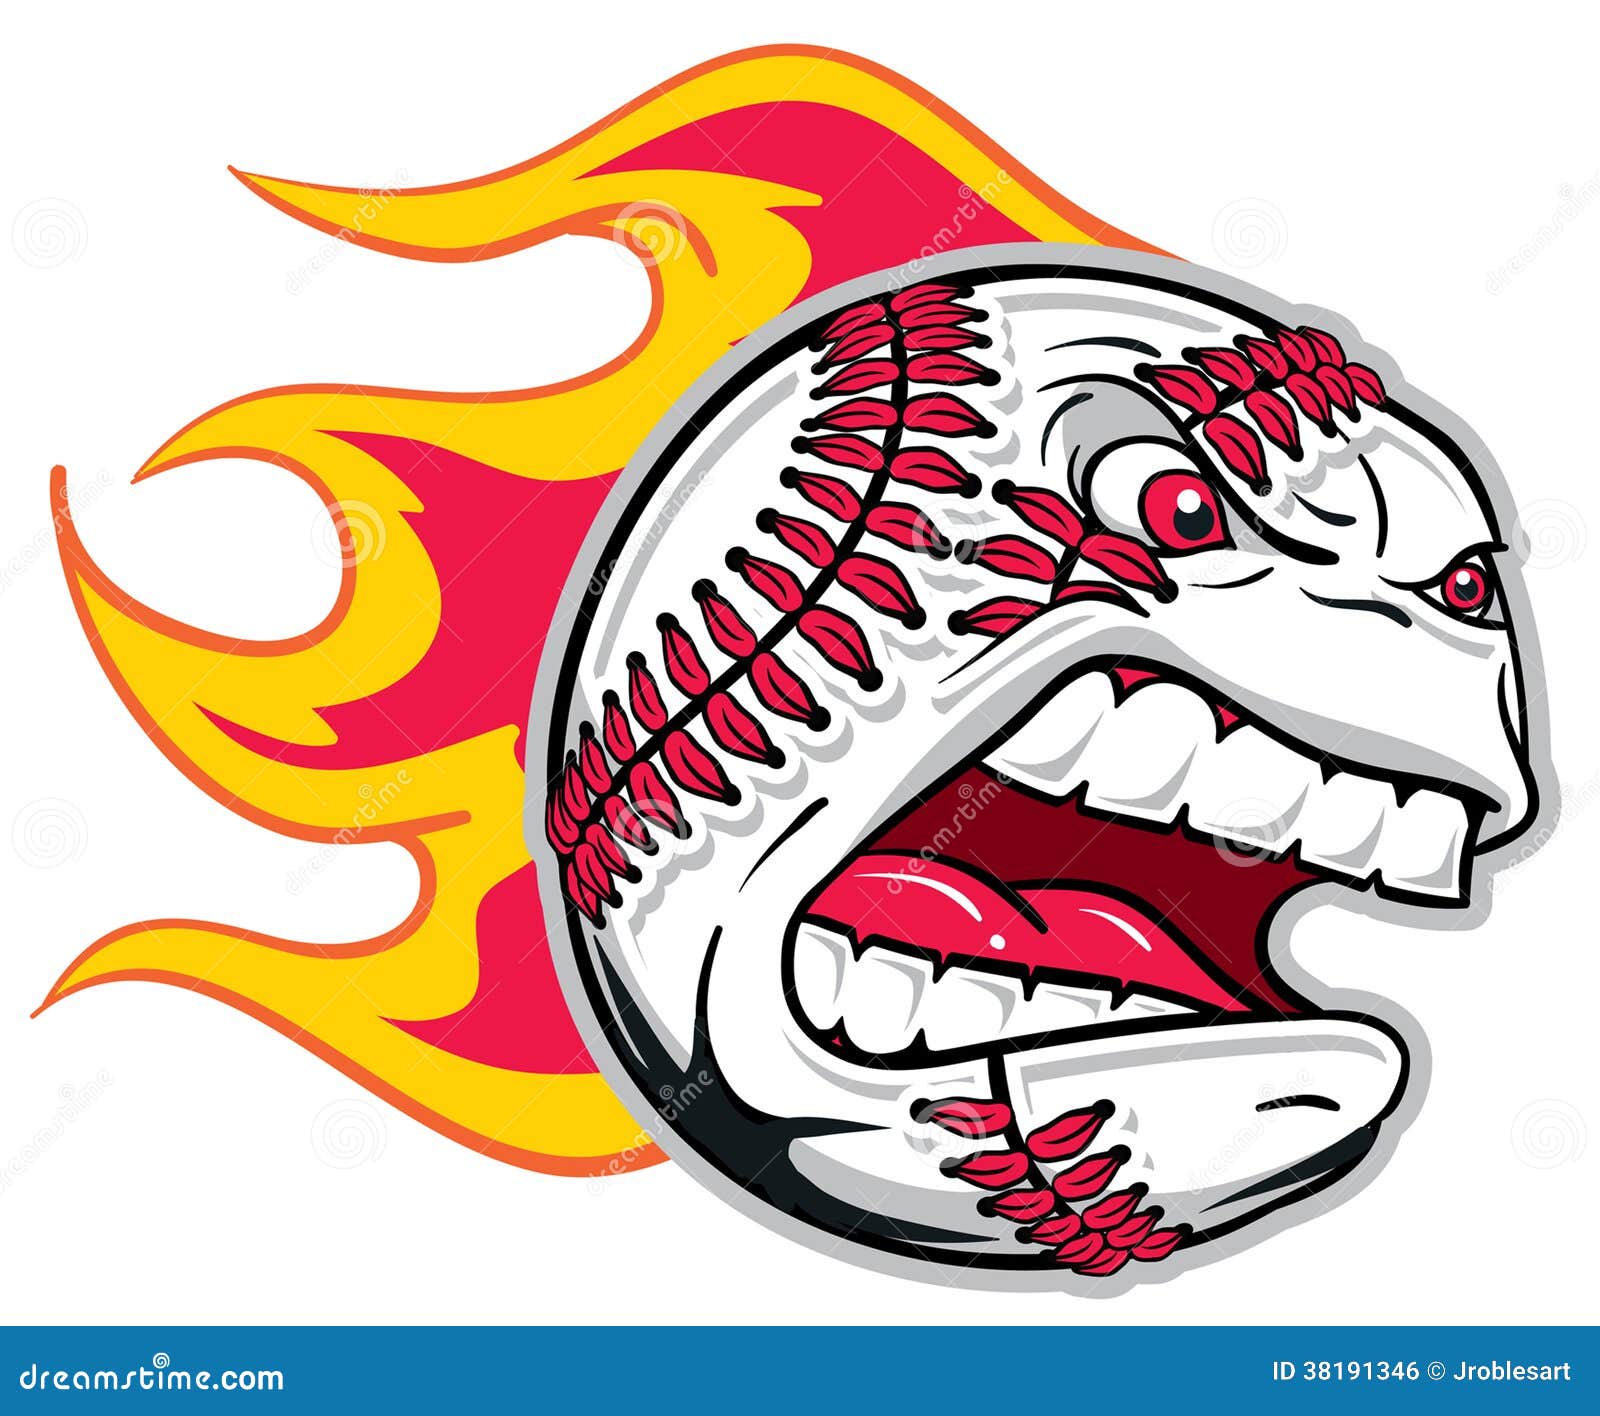 Angry Baseball Royalty Free Stock Image - Image: 38191346